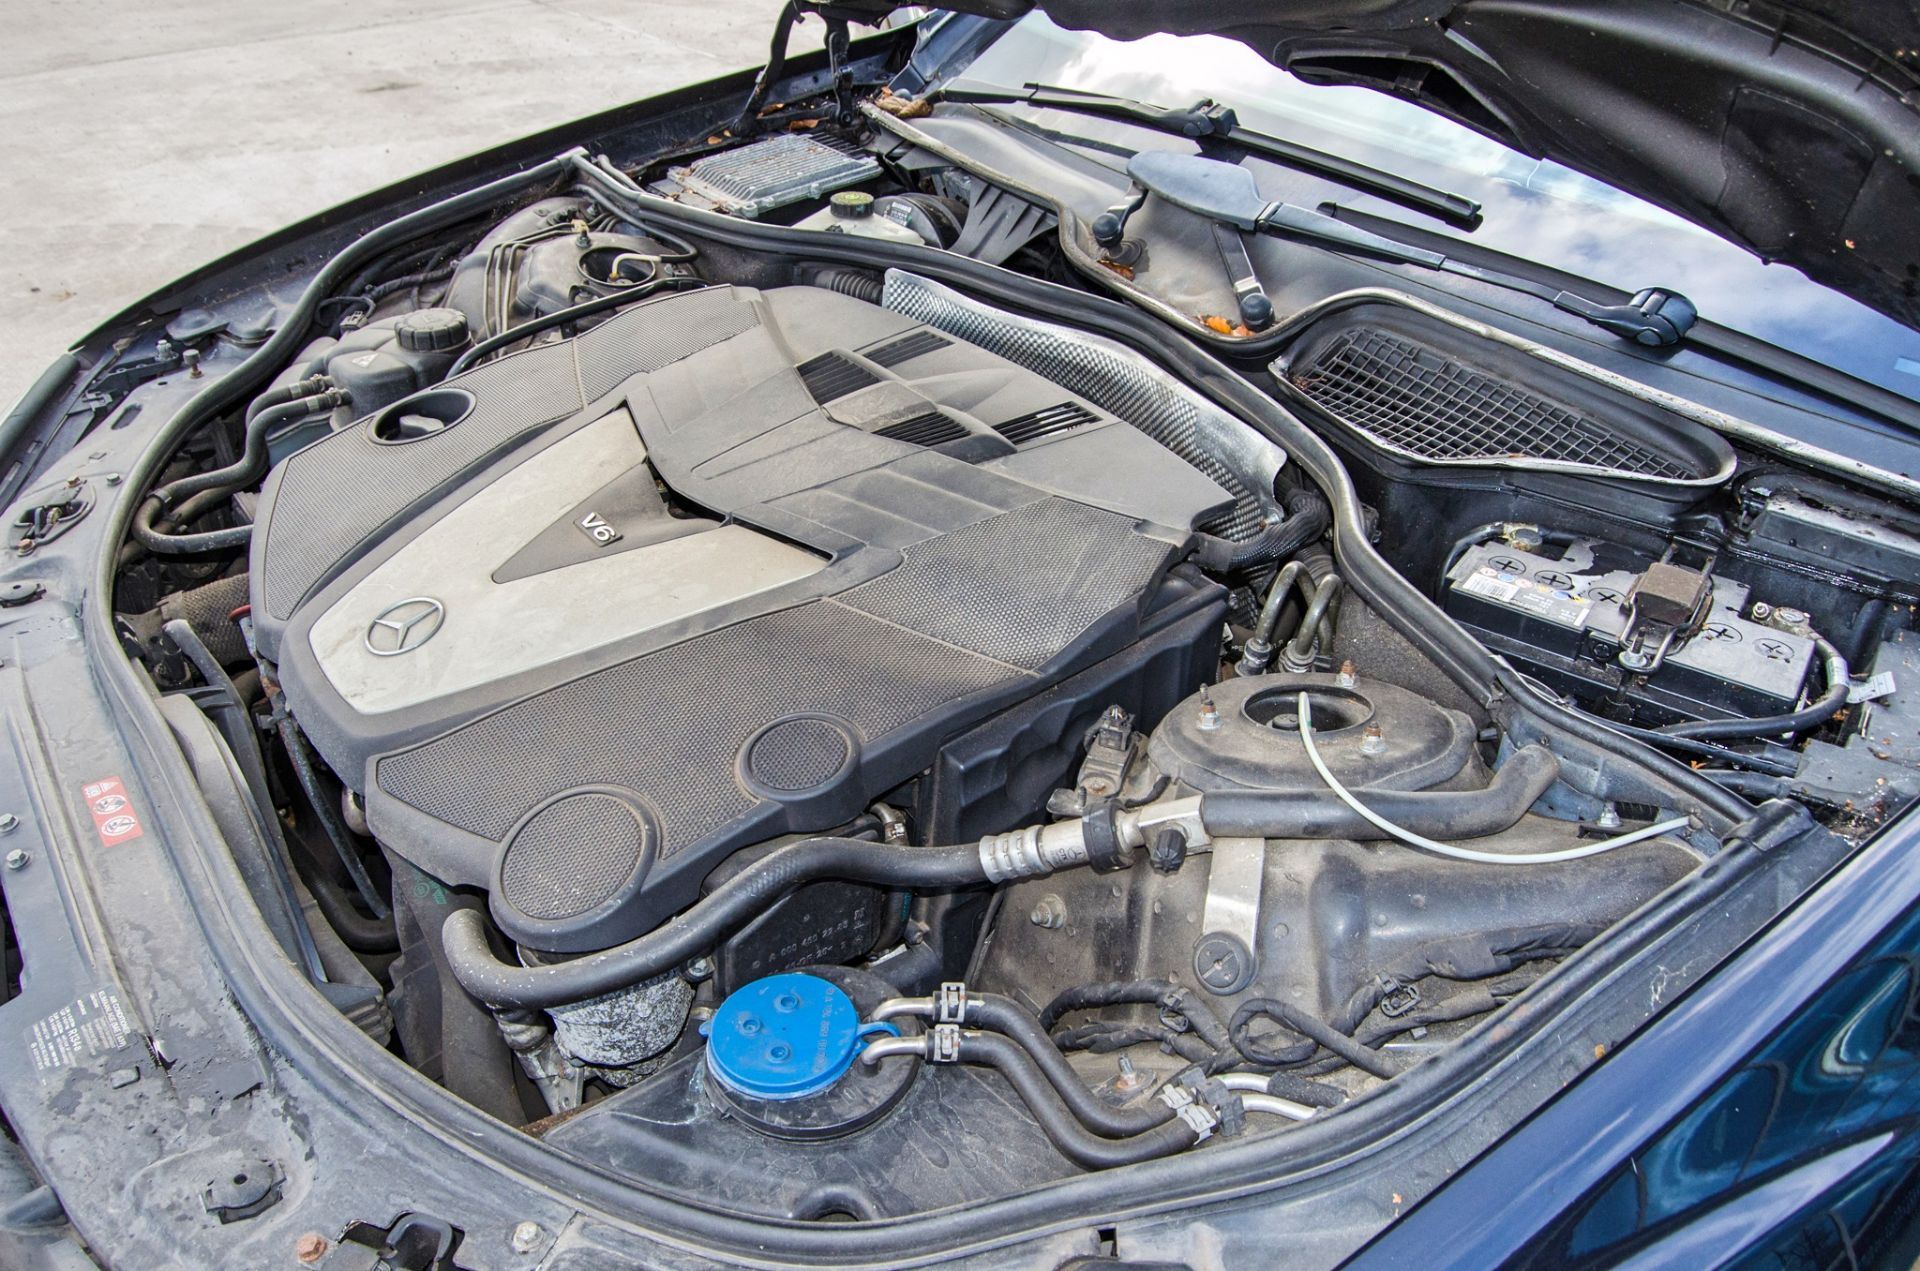 Mercedes Benz S320 CDi 2987cc diesel V6 automatic 4 door saloon car Registration Number: SP06 HKC - Image 34 of 43